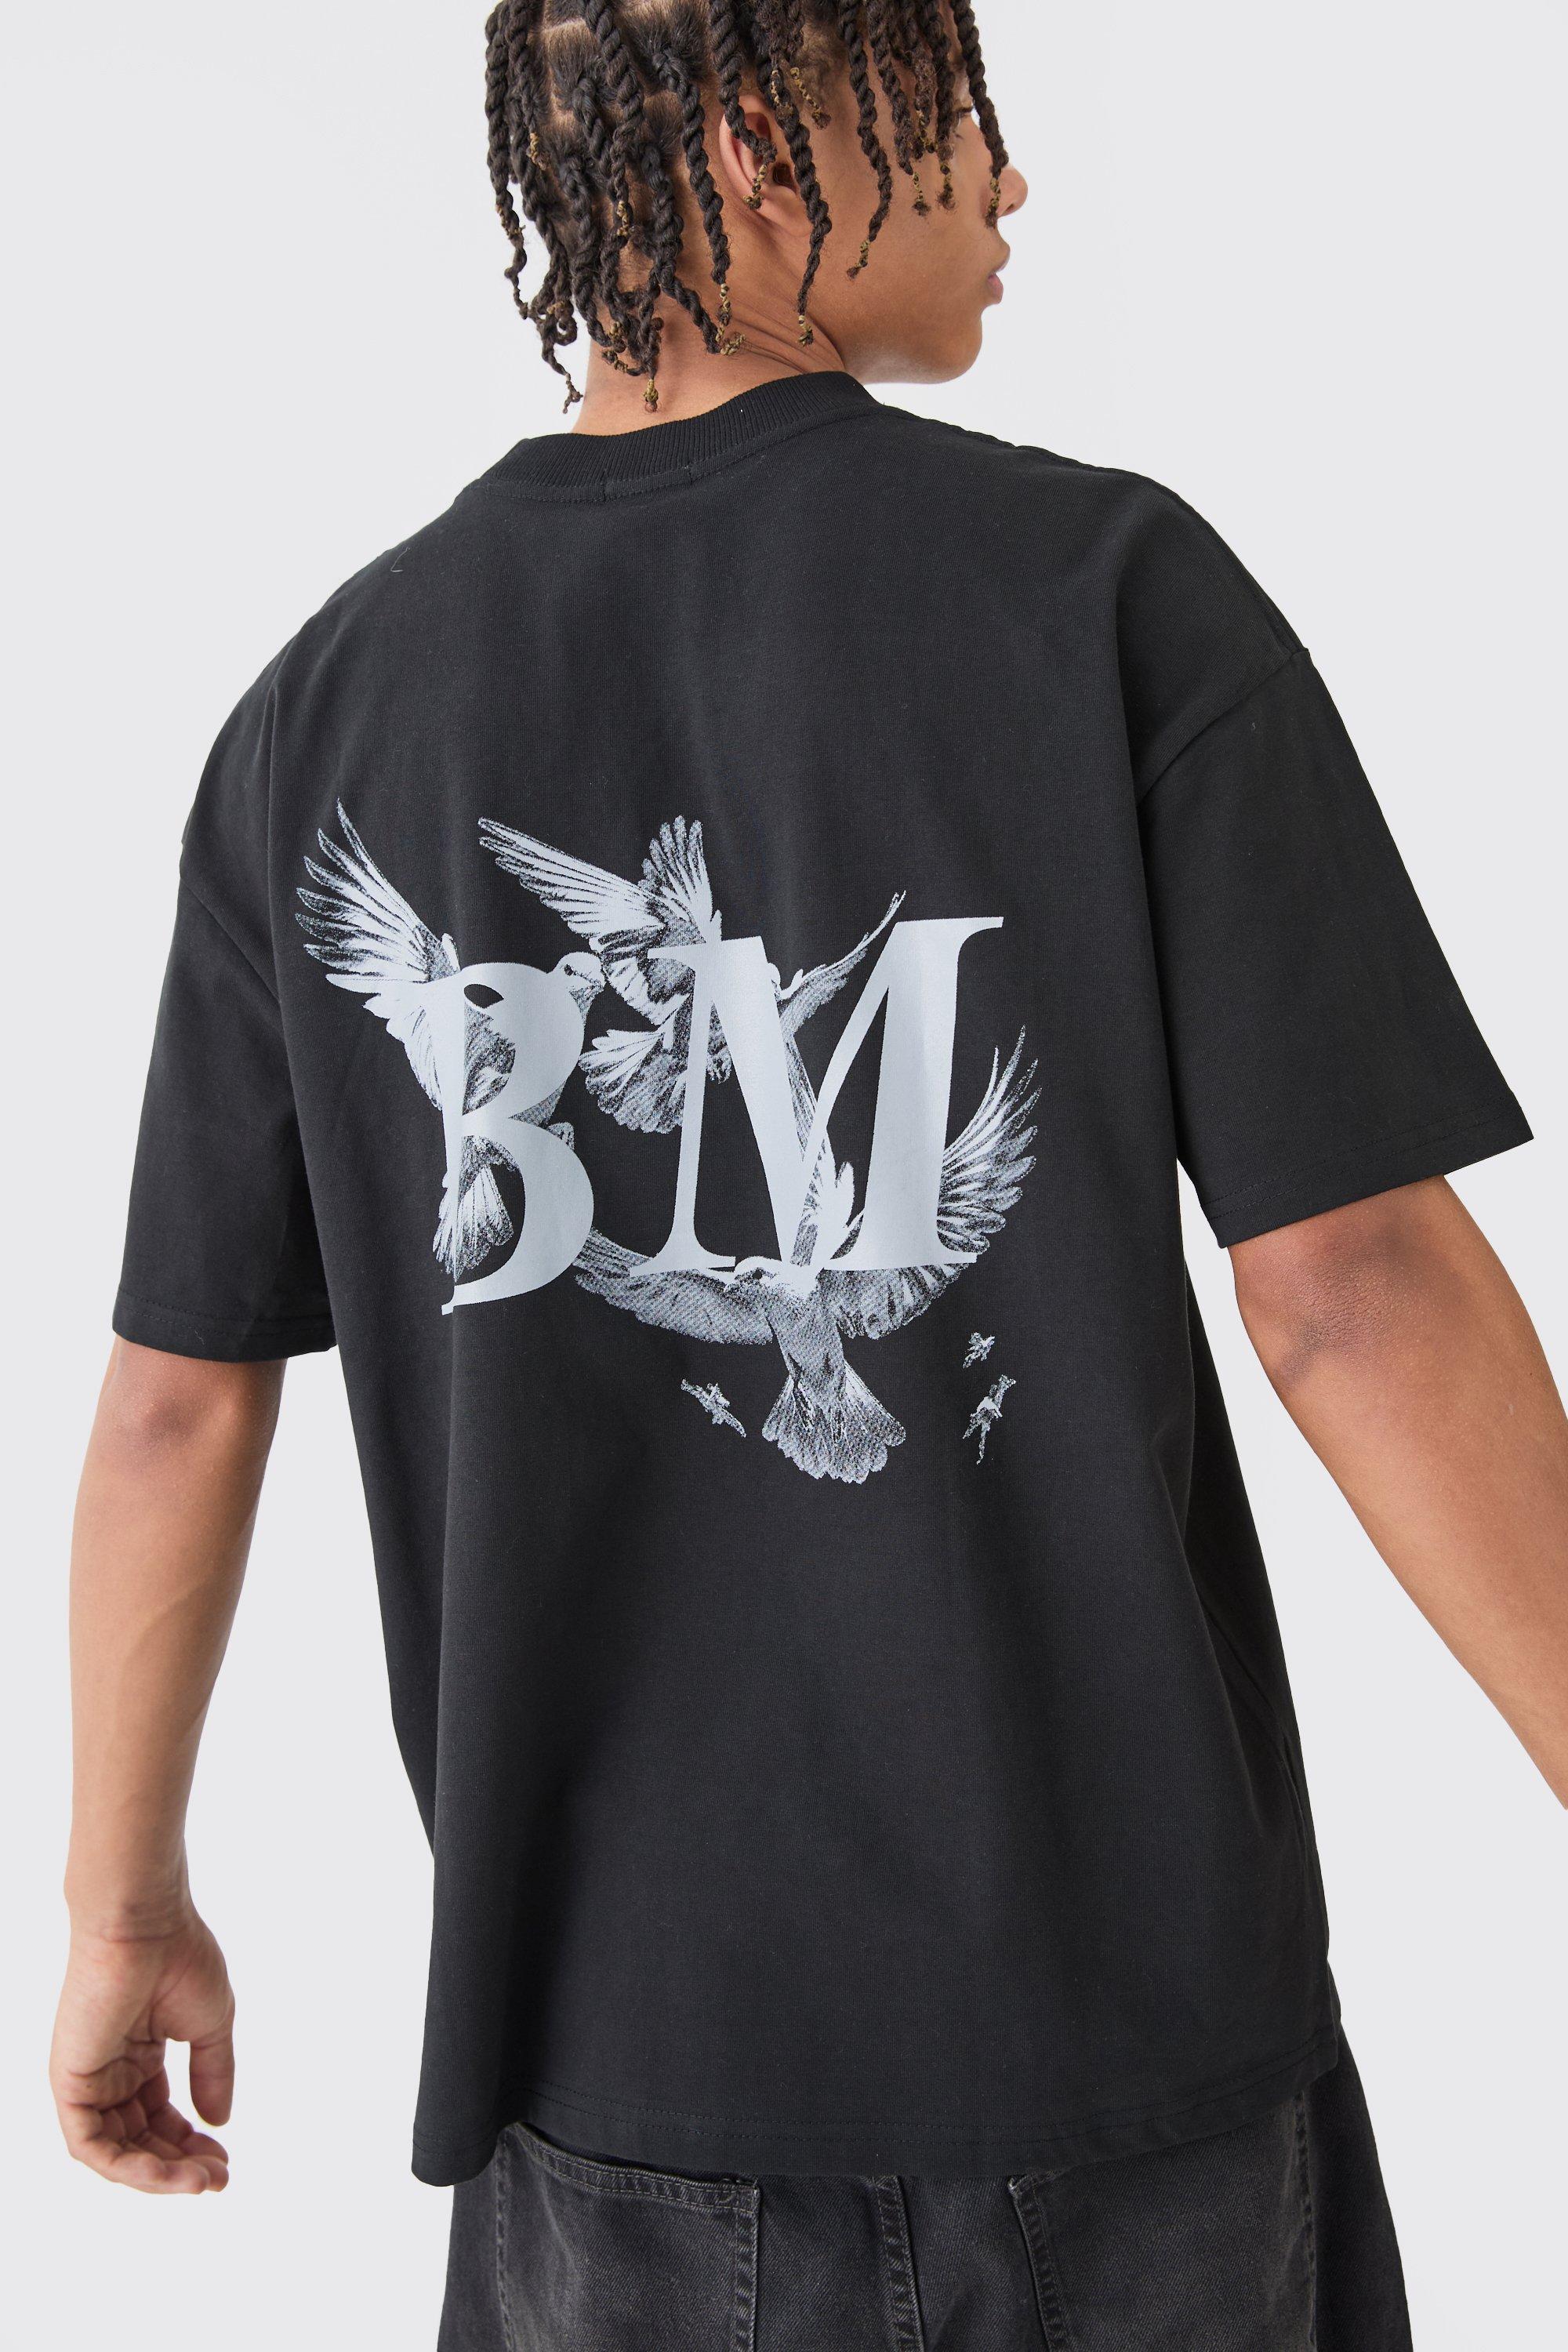 Womens Oversized Bm Graphic T-Shirt - Black - L, Black